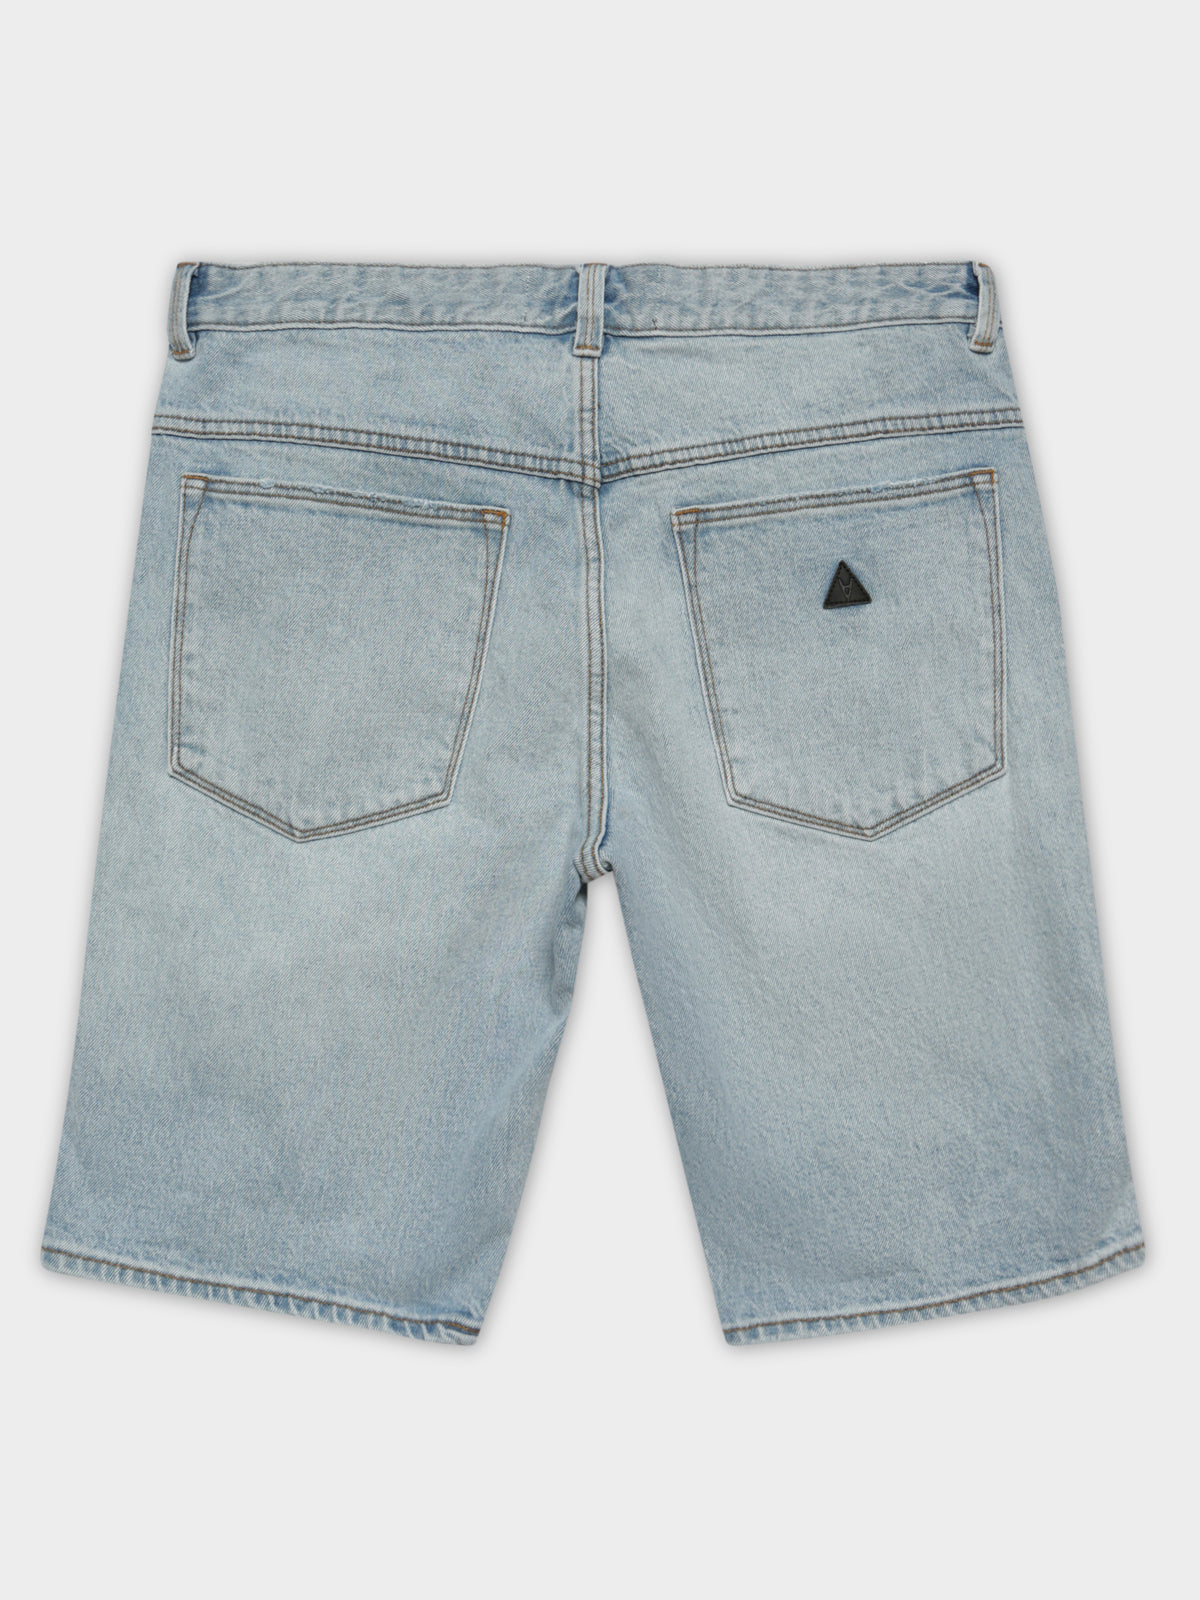 A Dropped Slim Shorts in Hunter Blue Denim